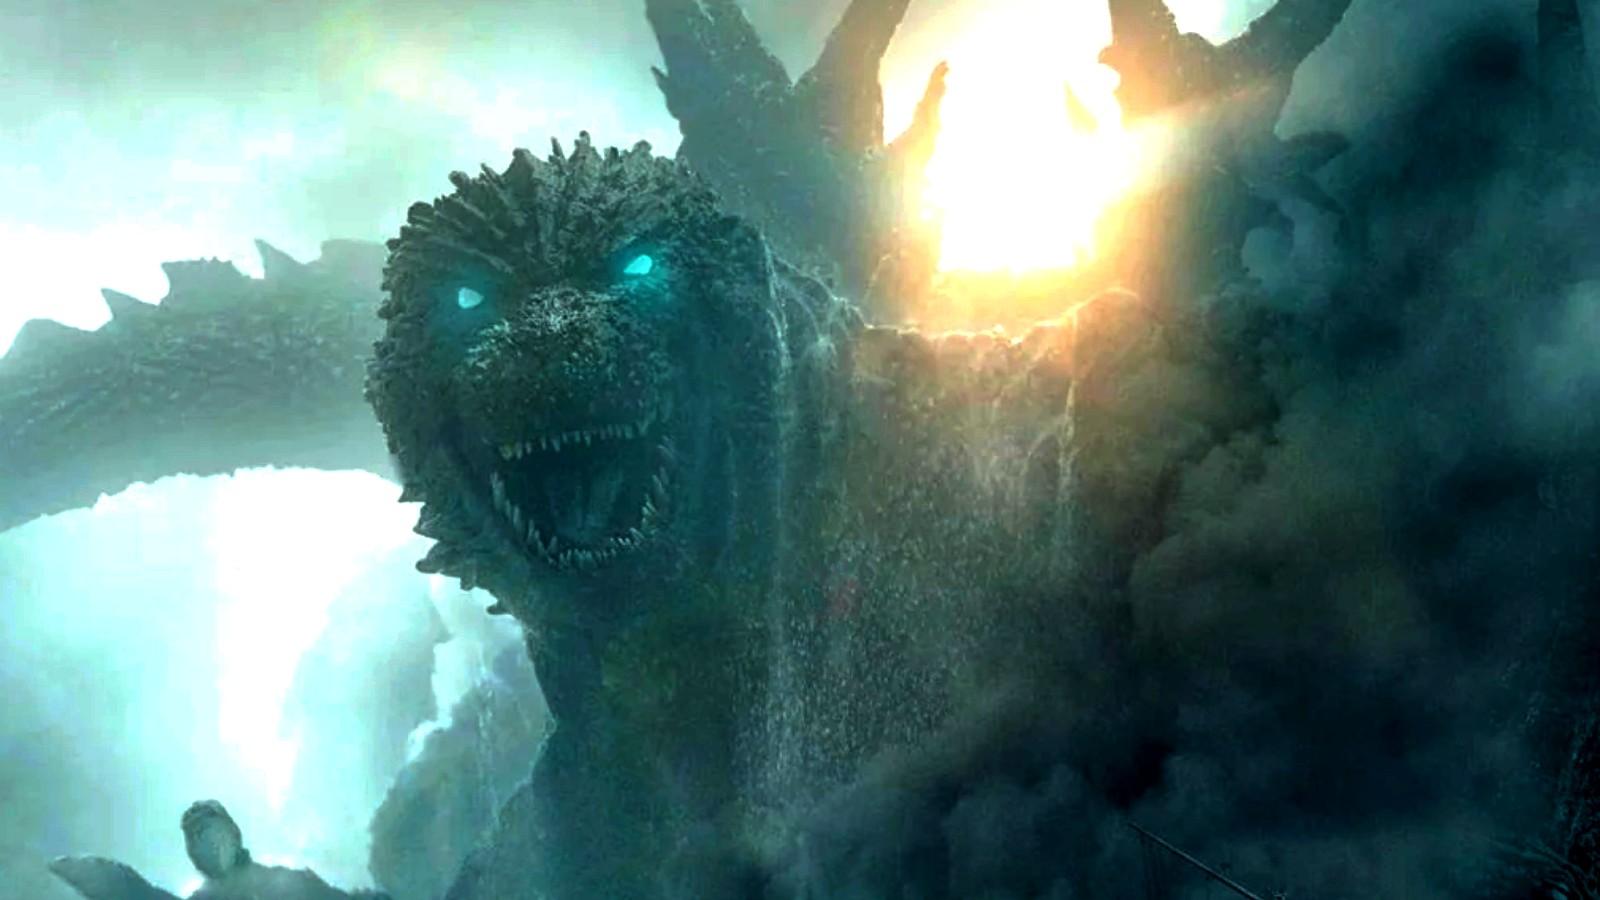 Every Movie Godzilla Design, From 1954 to Godzilla Minus One